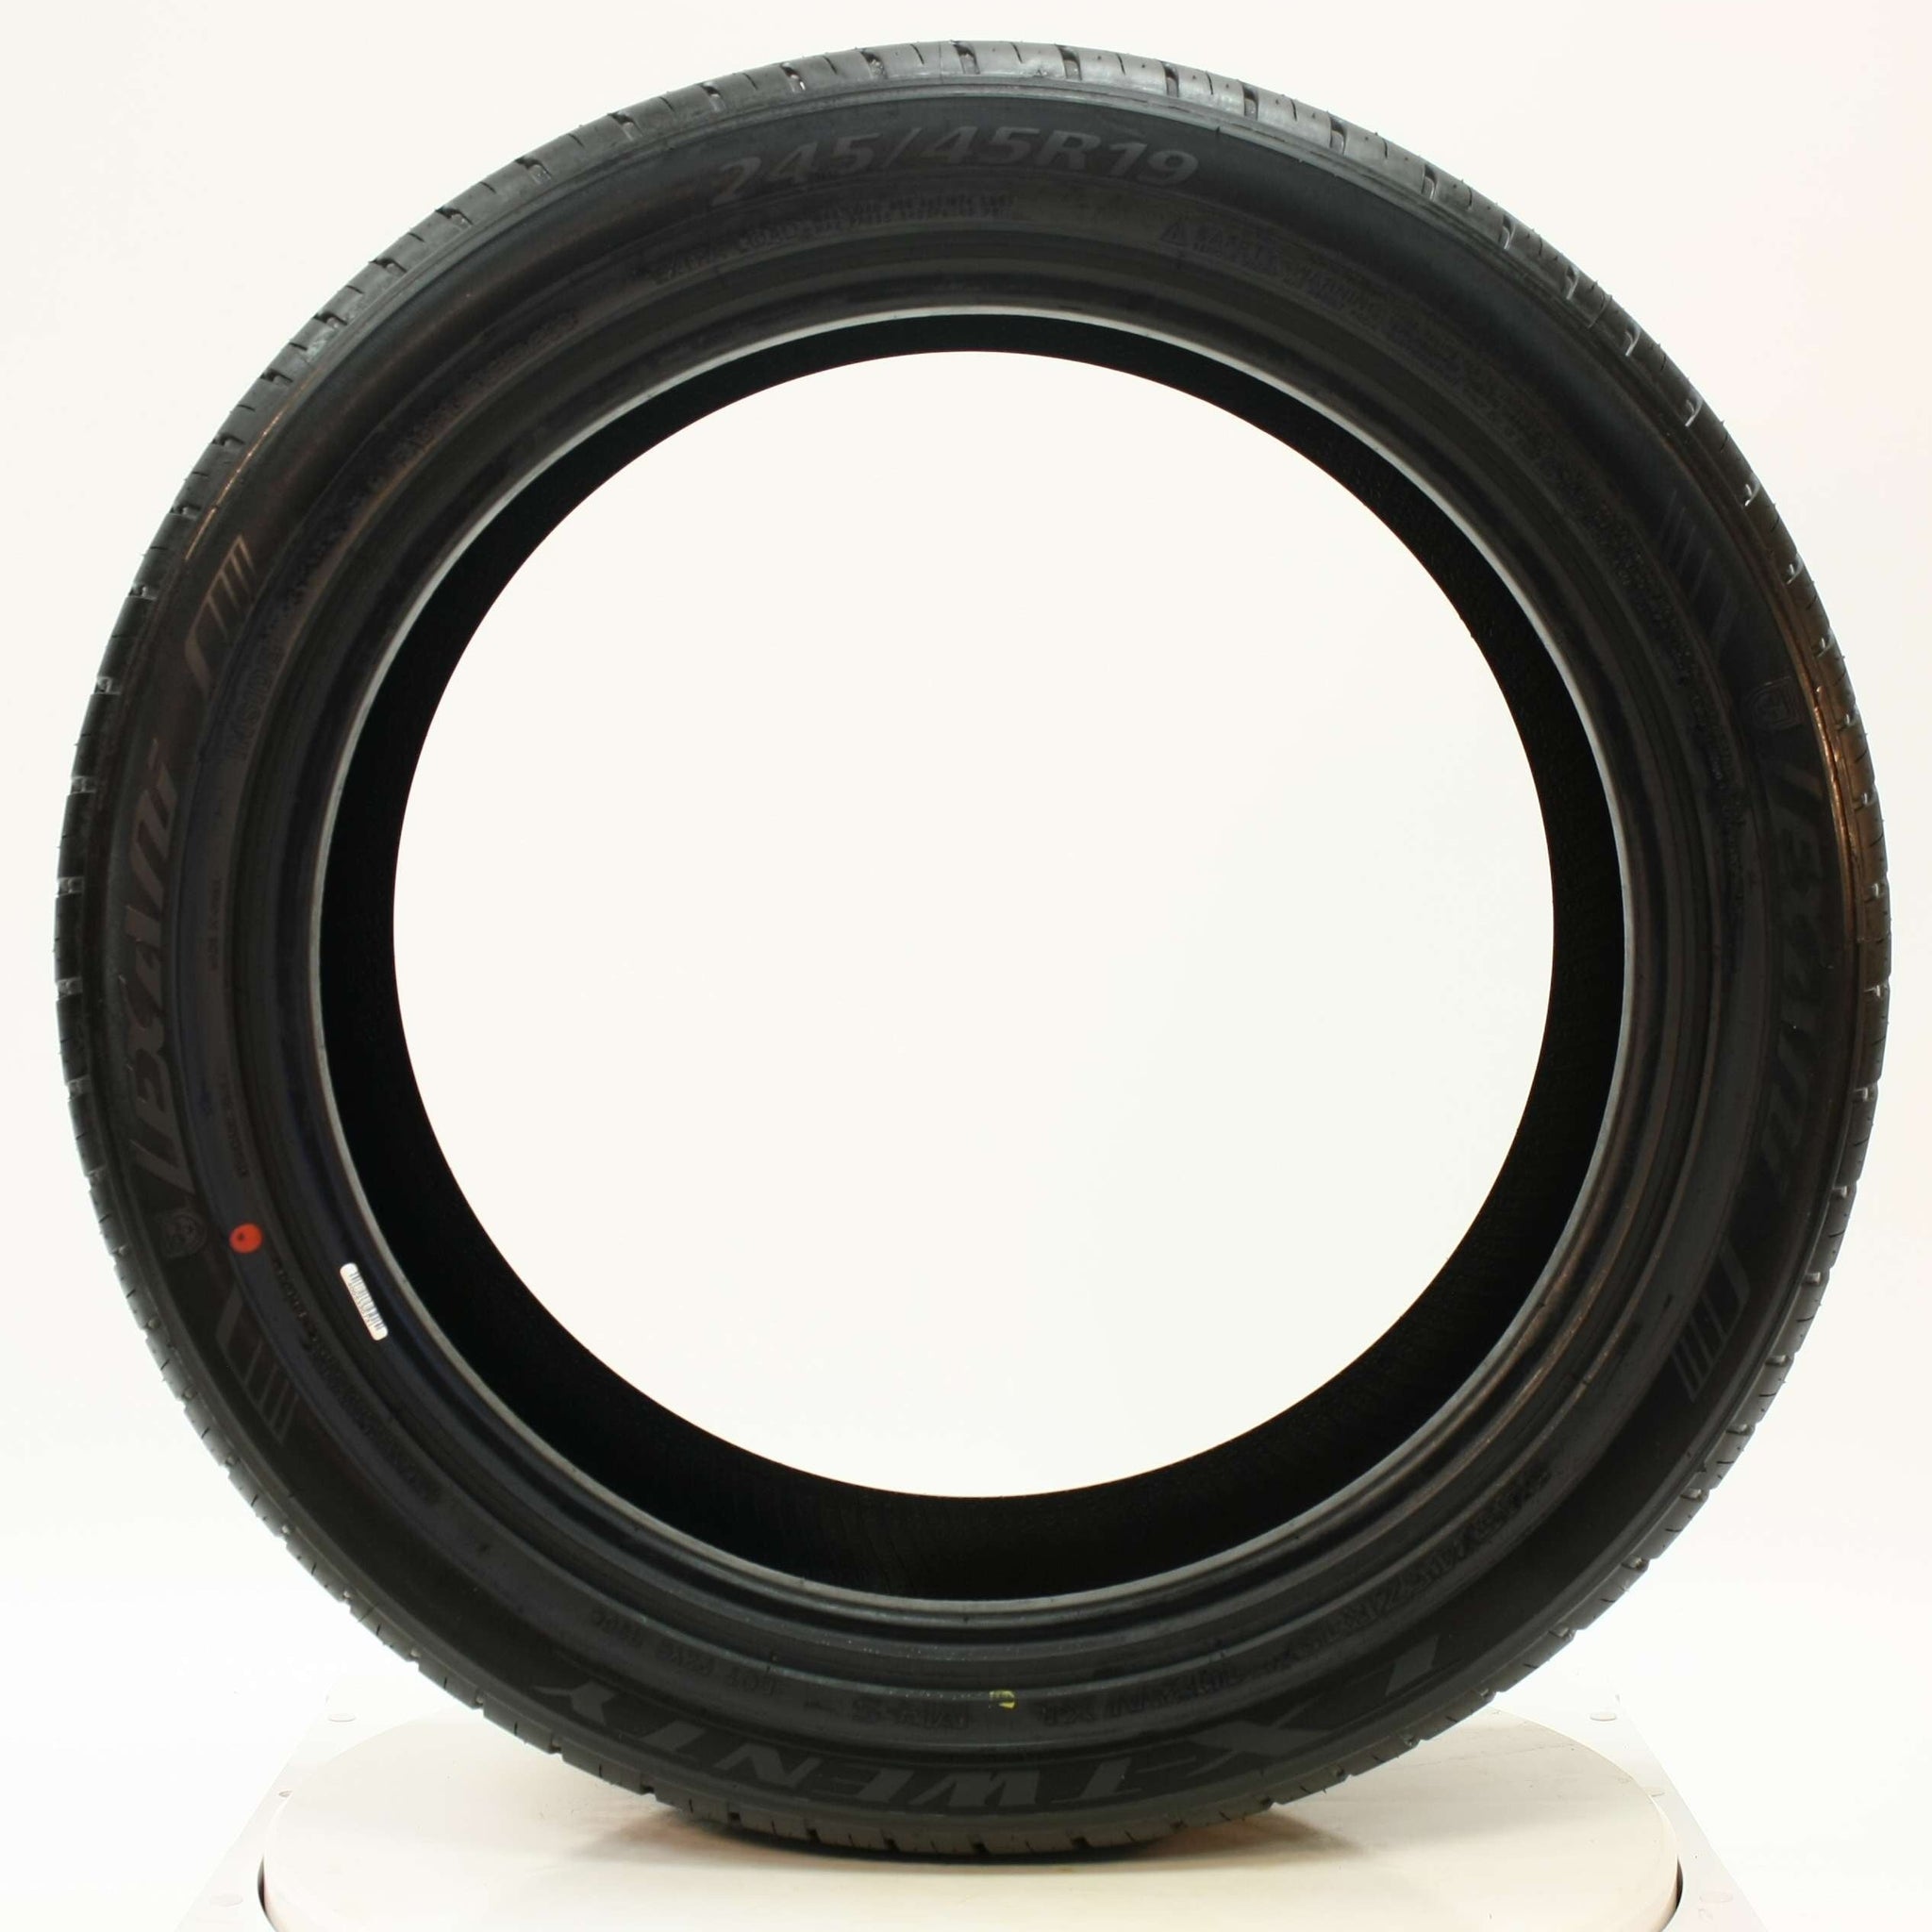 LEXANI LX-TWENTY 245/45ZR20 (28.7X9.6R 20) Tires